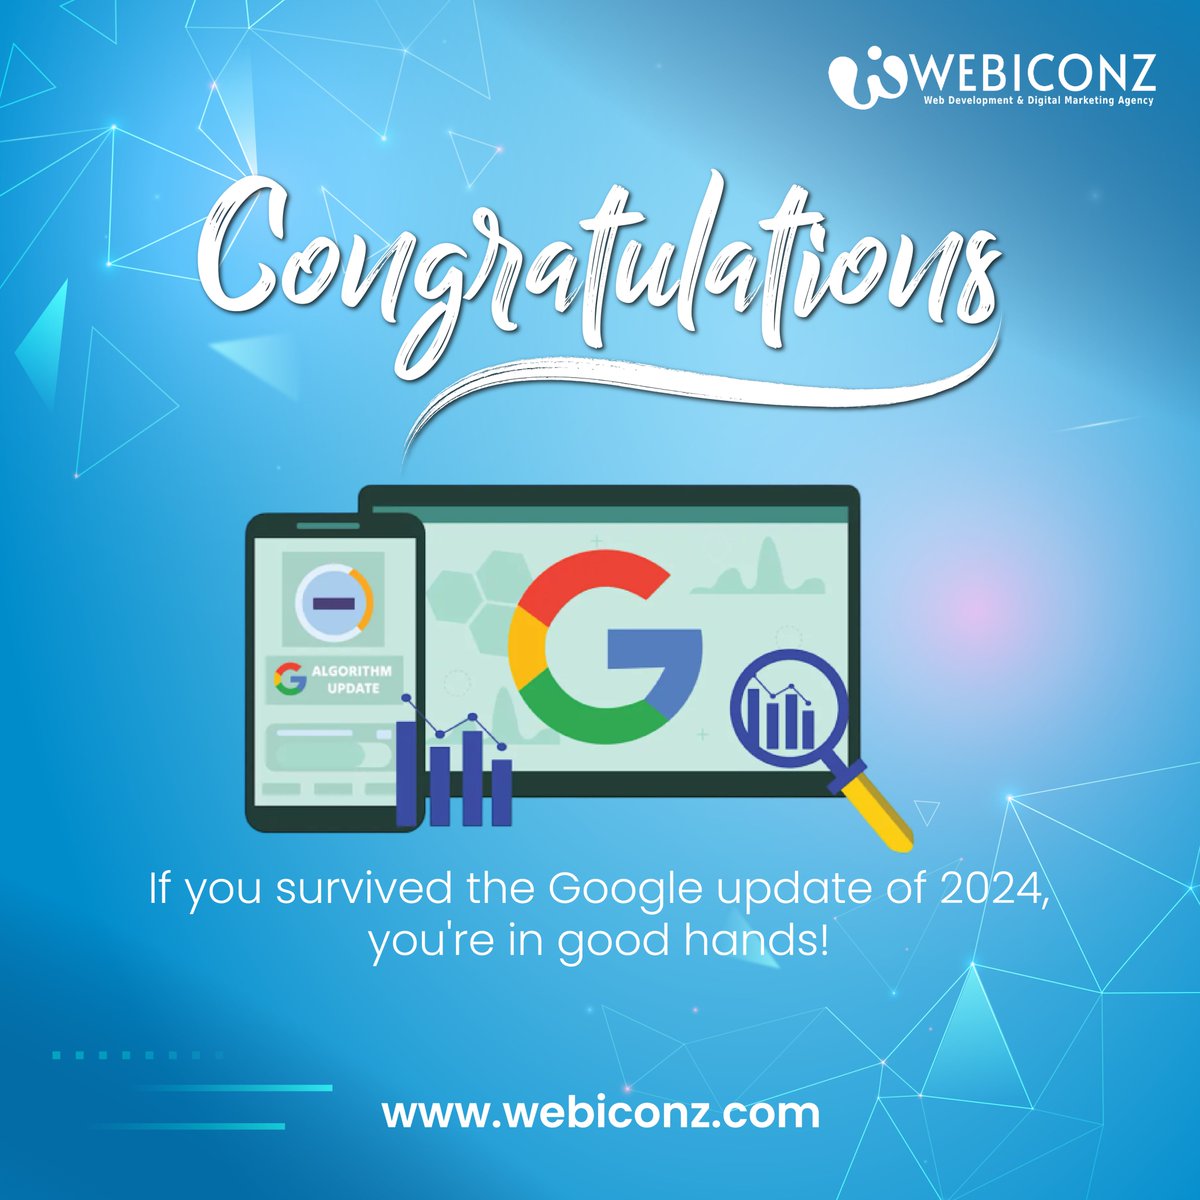 🥳🥳🥳 Congratulations! 🥳🥳🥳
🤩 If you survived the Google update of 2024, you're in good hands! 🤩
🌐 webiconz.com
#webiconztechnologies #webiconz #googleupdate2024 #AI #T20WorldCup24 #Google #googleupdate #duckybhai #Dubai #digitalmarketer #ContentWriting